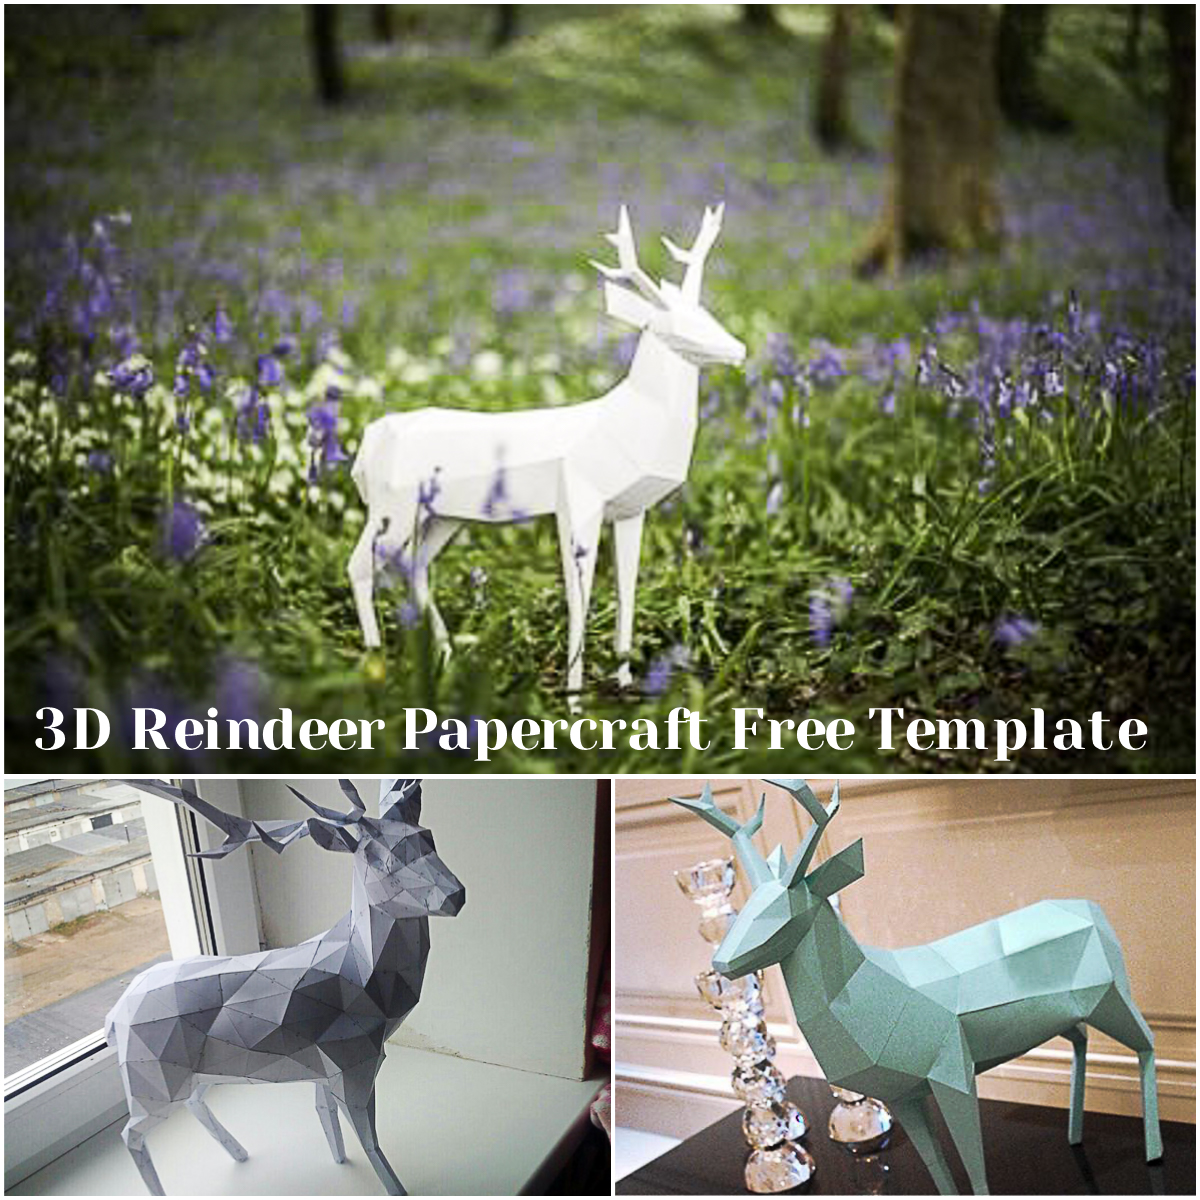 3D Reindeer Papercraft Free Template Free download